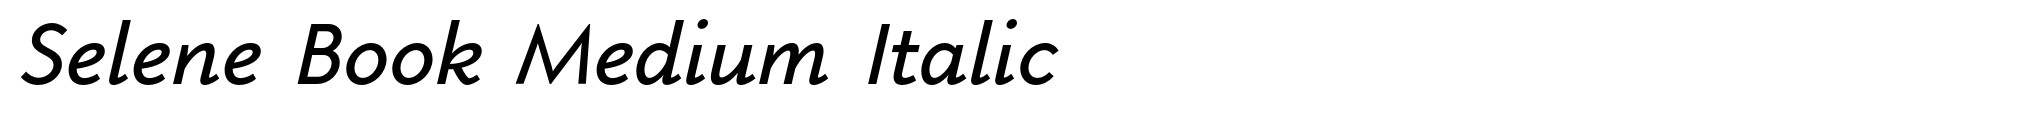 Selene Book Medium Italic image